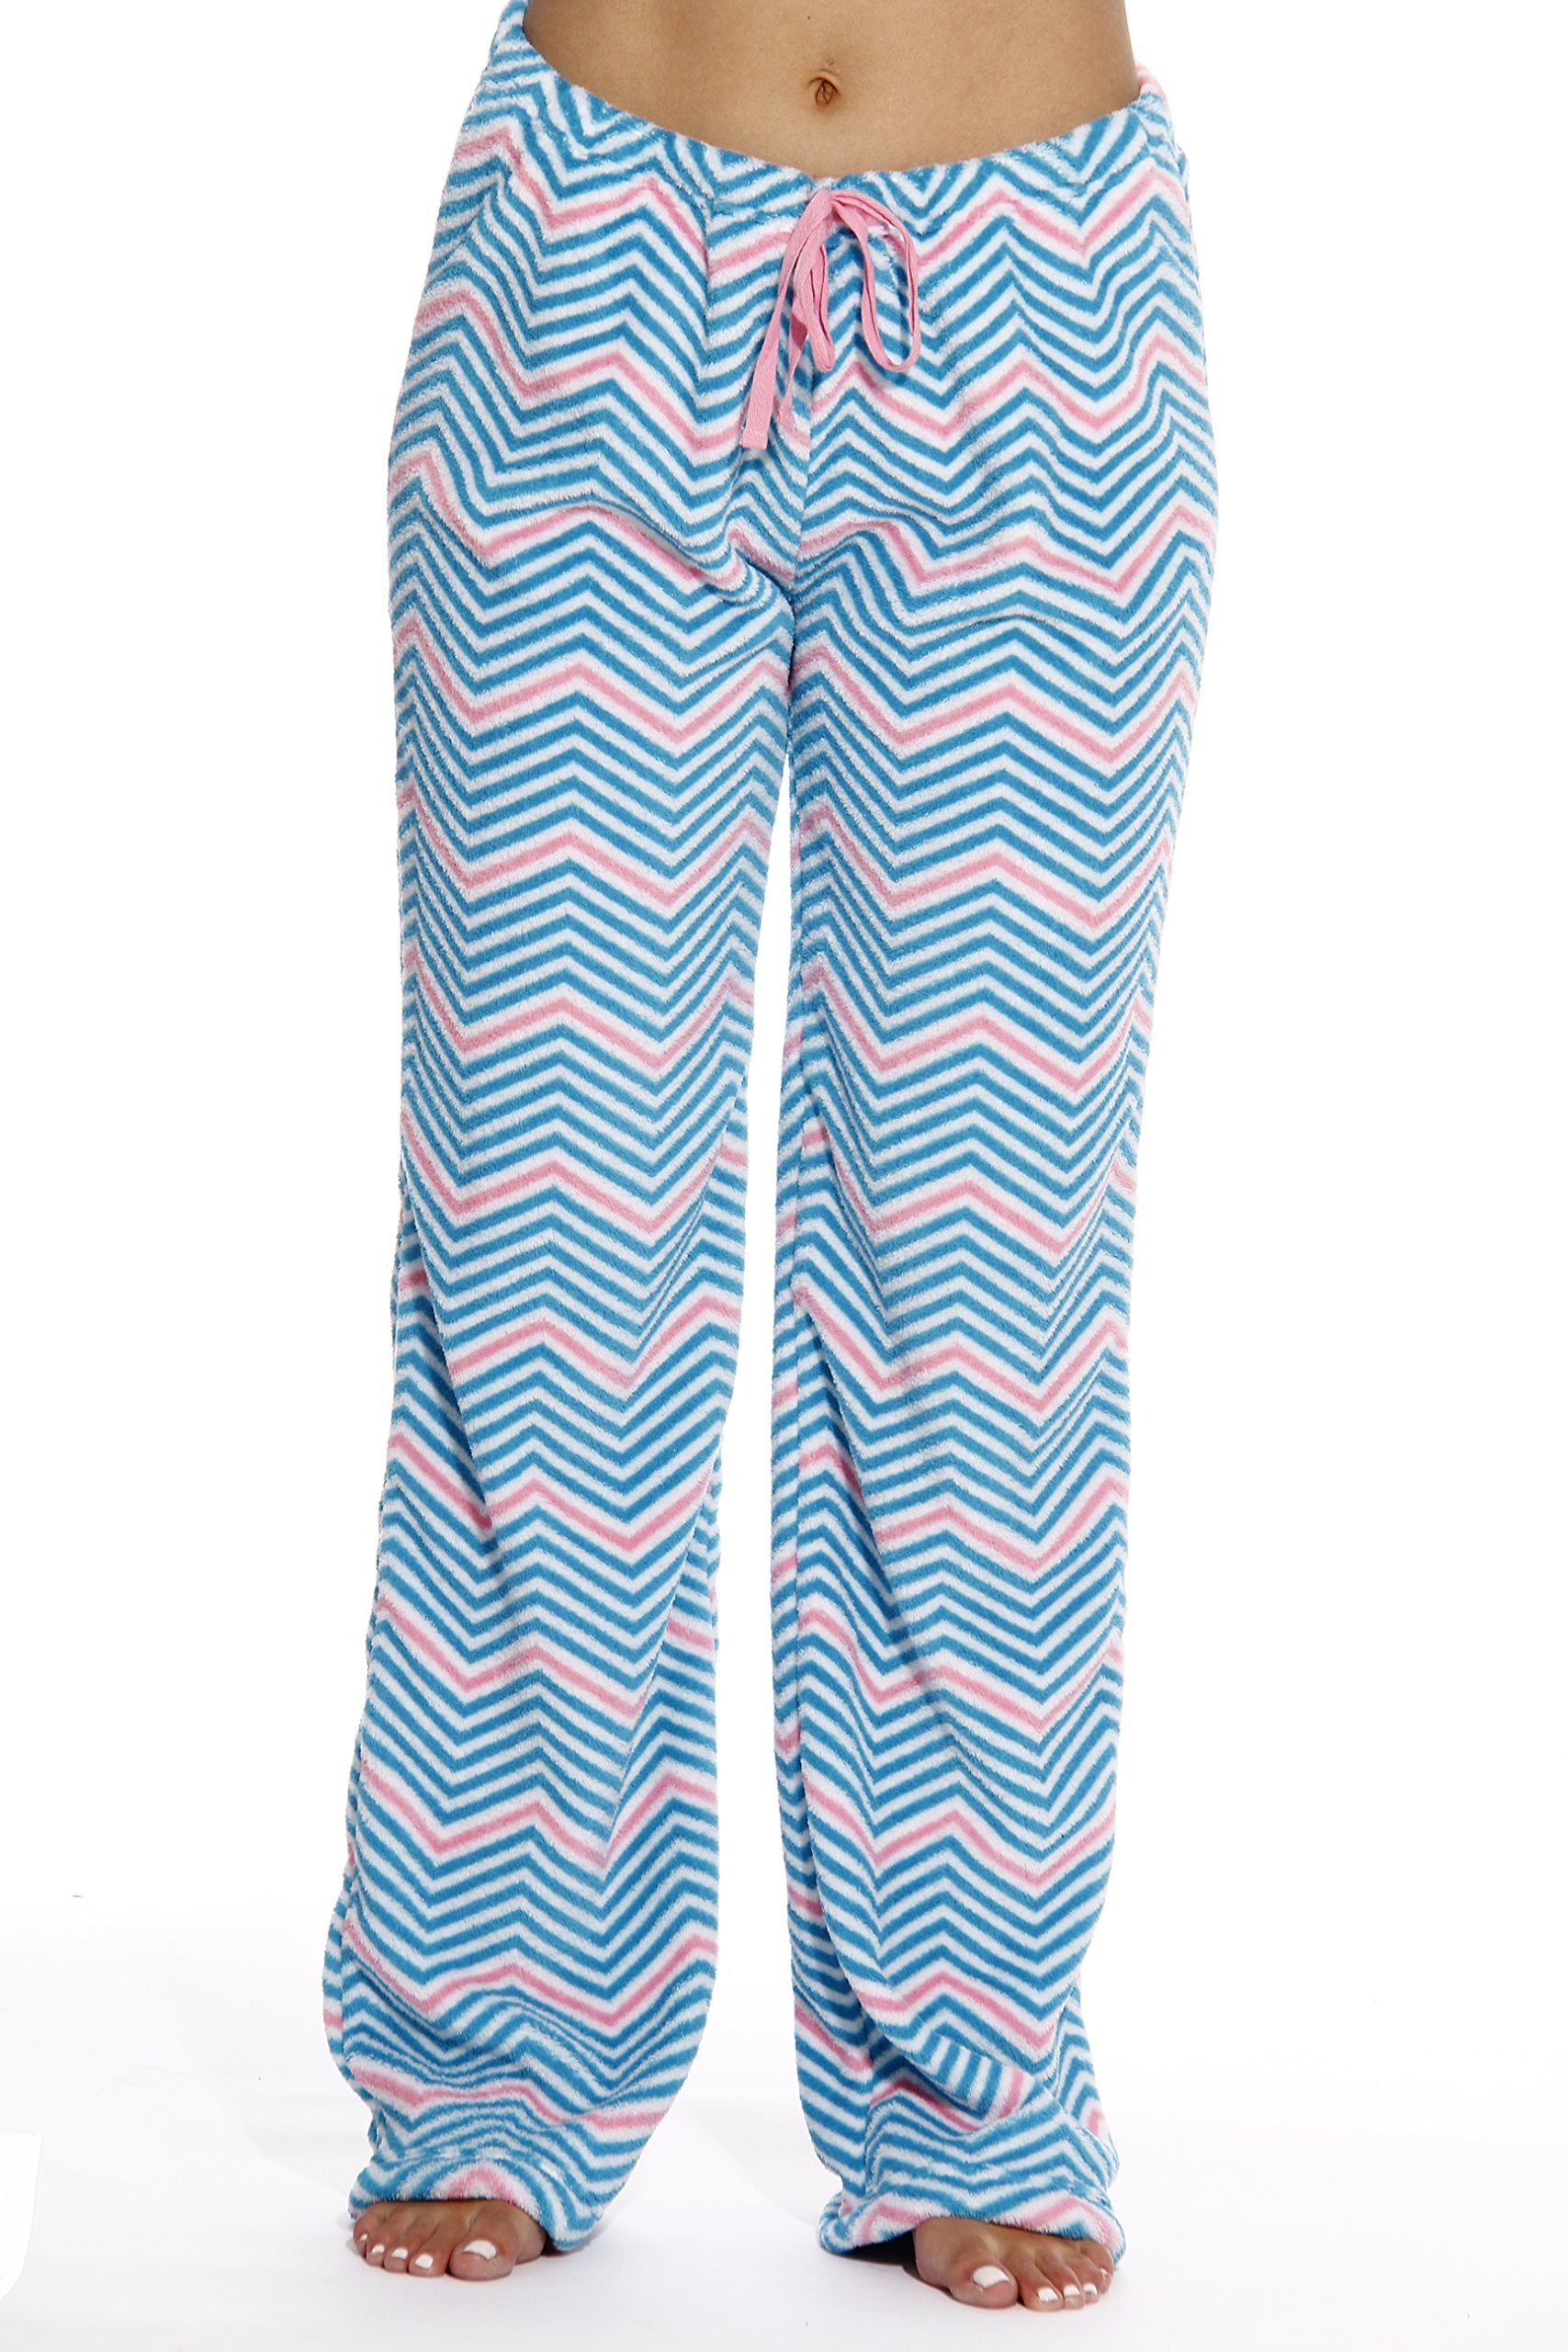 6339-10126-L Just Love Women's Plush Pajama Pants - Petite to Plus Size  Pajamas : : Clothing, Shoes & Accessories